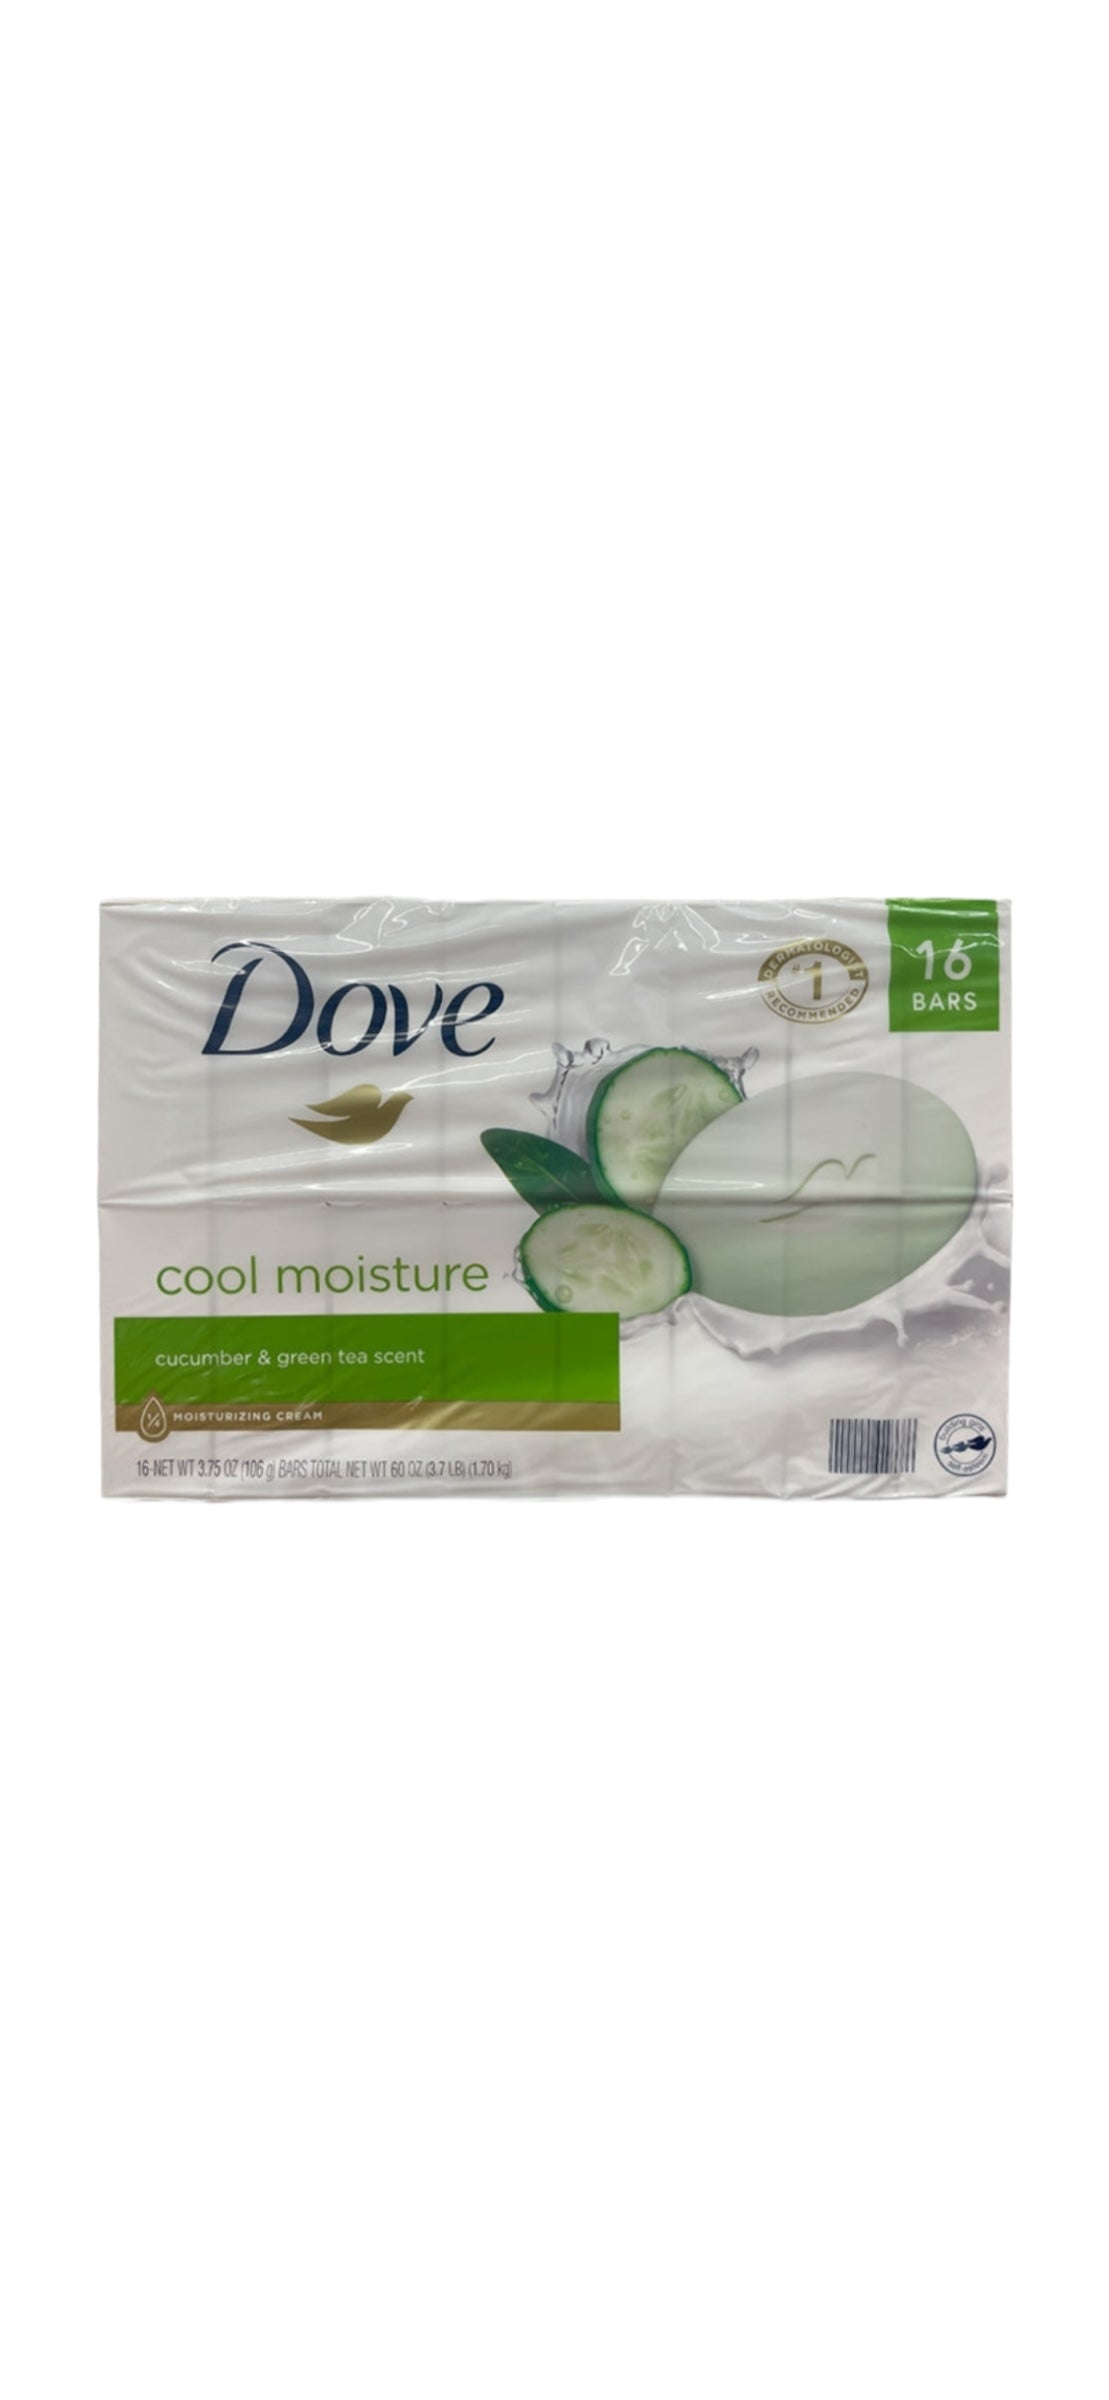 Dove Cool Moisture Cucumber & Green tea scent 16 Bar 3.75 oz